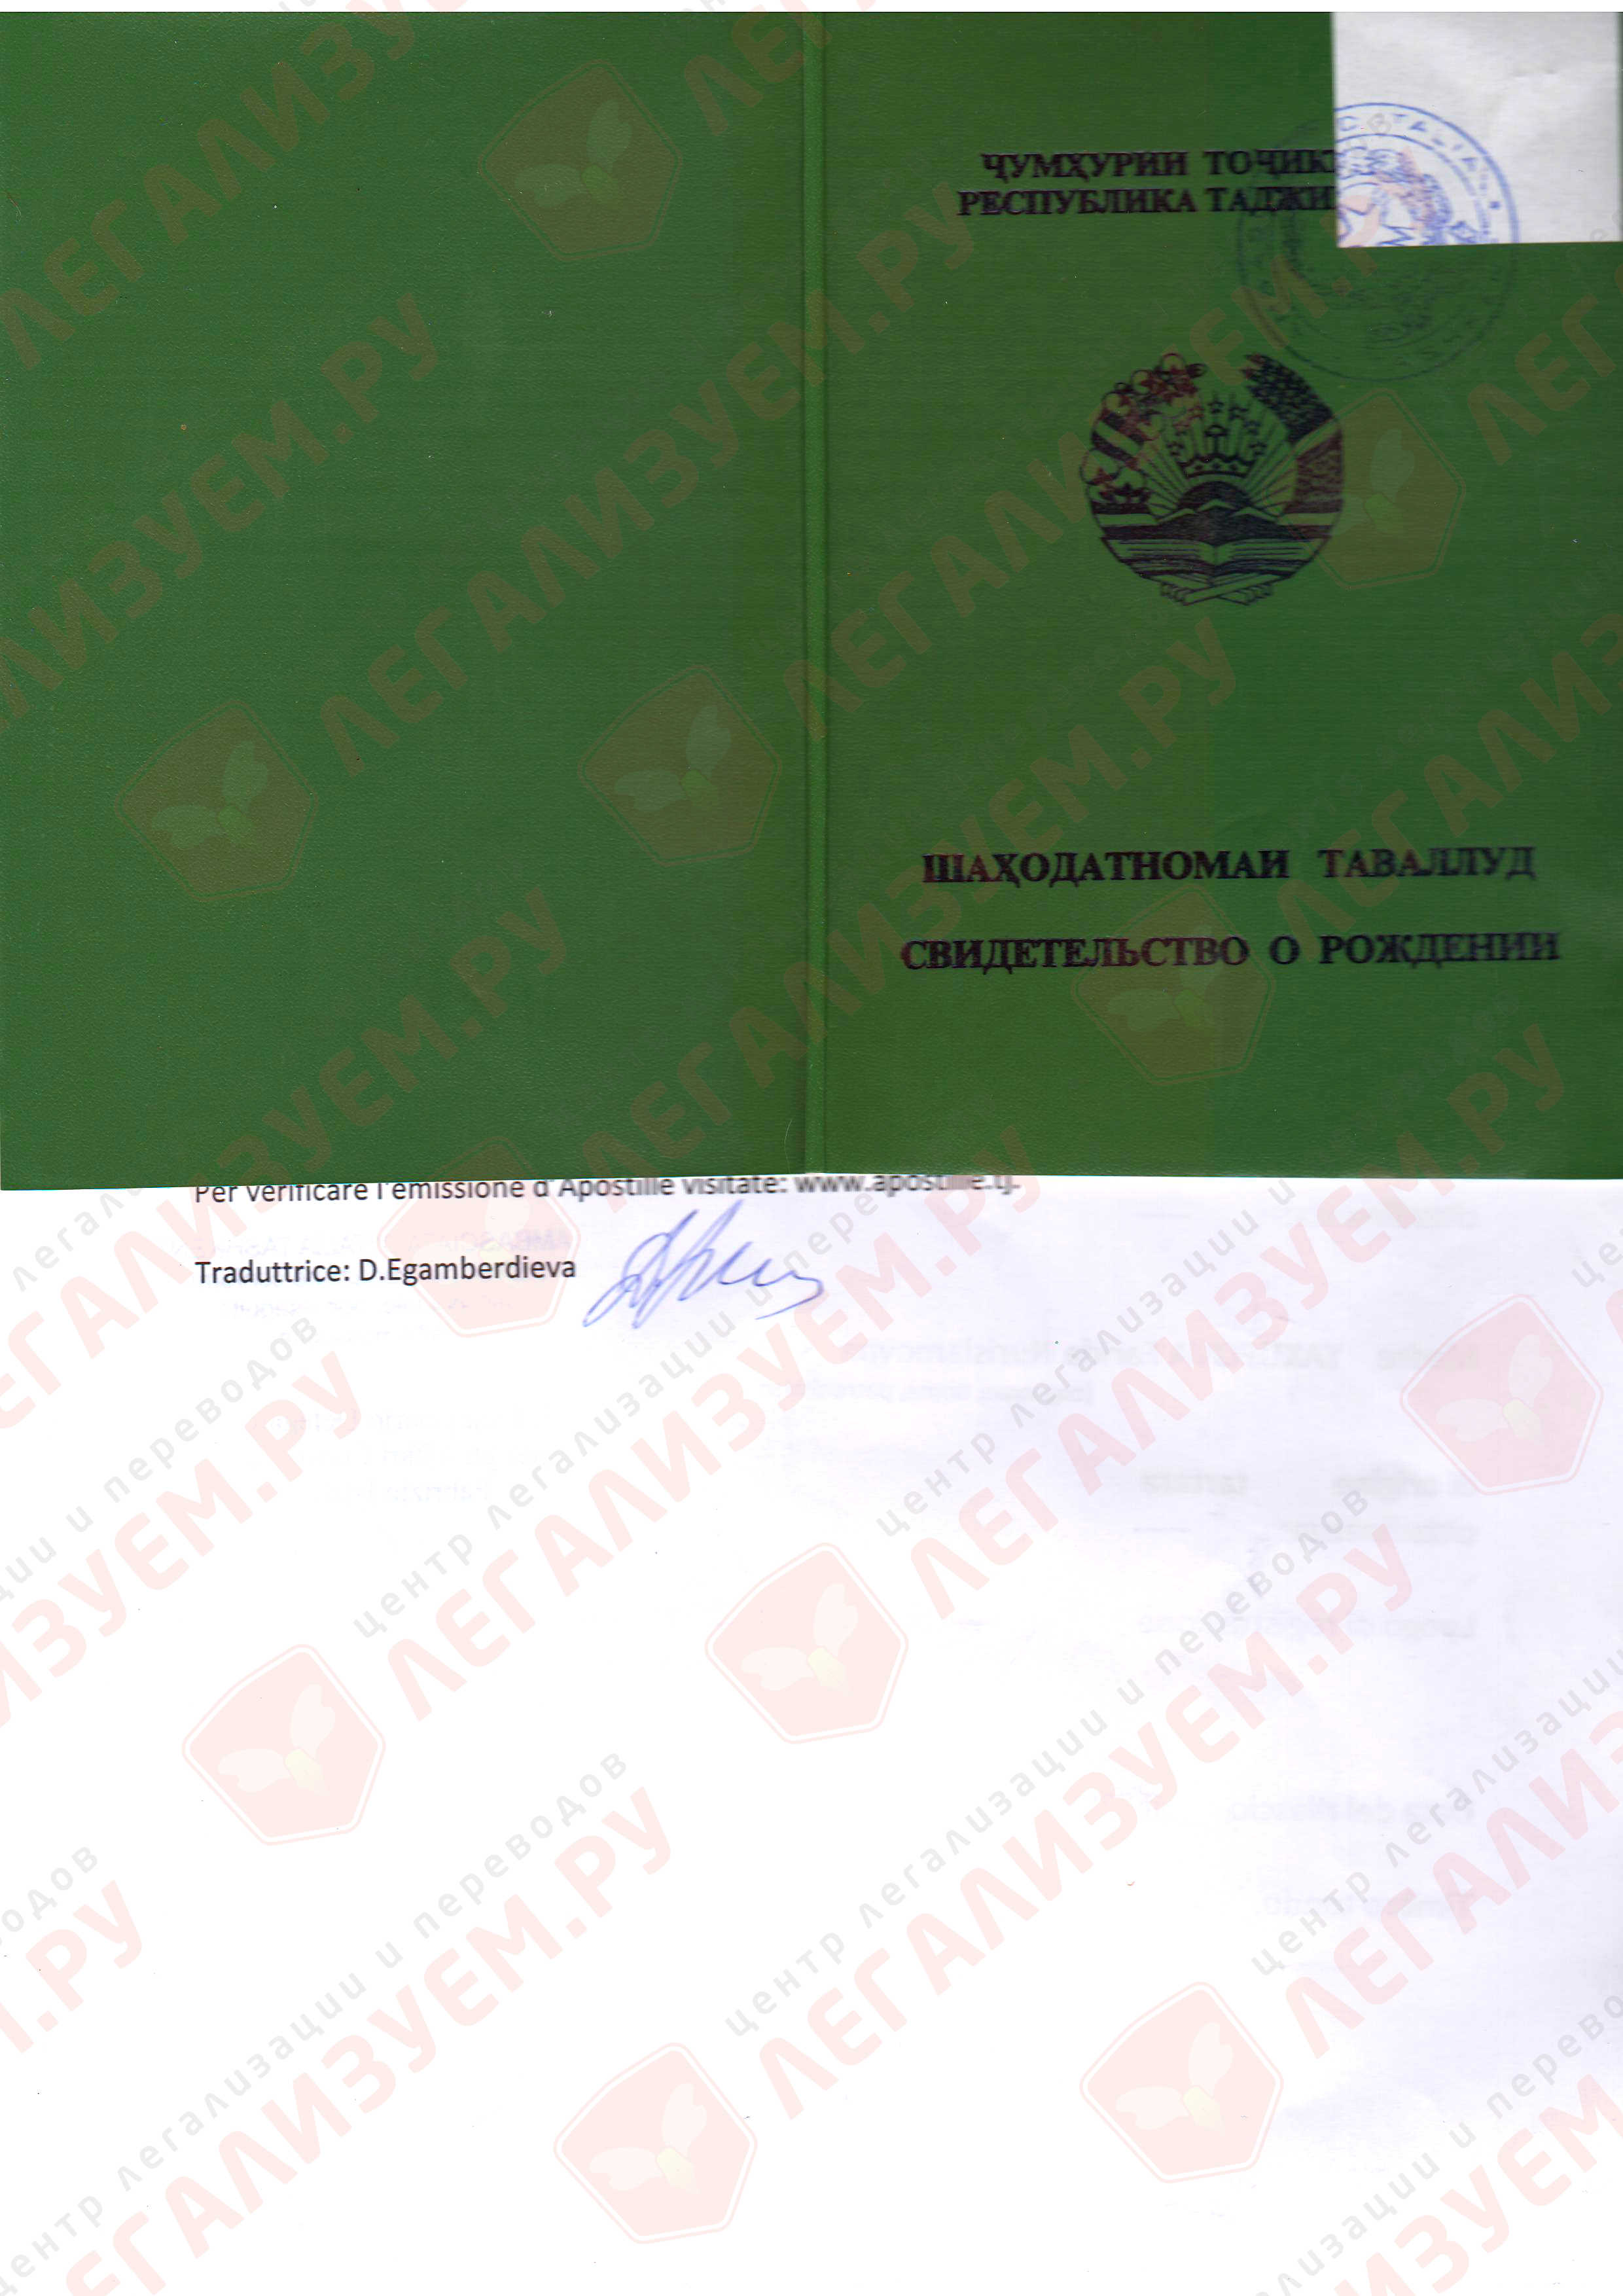 legalizaciya-svidetelstva-Tadzhikistan-Italia-1